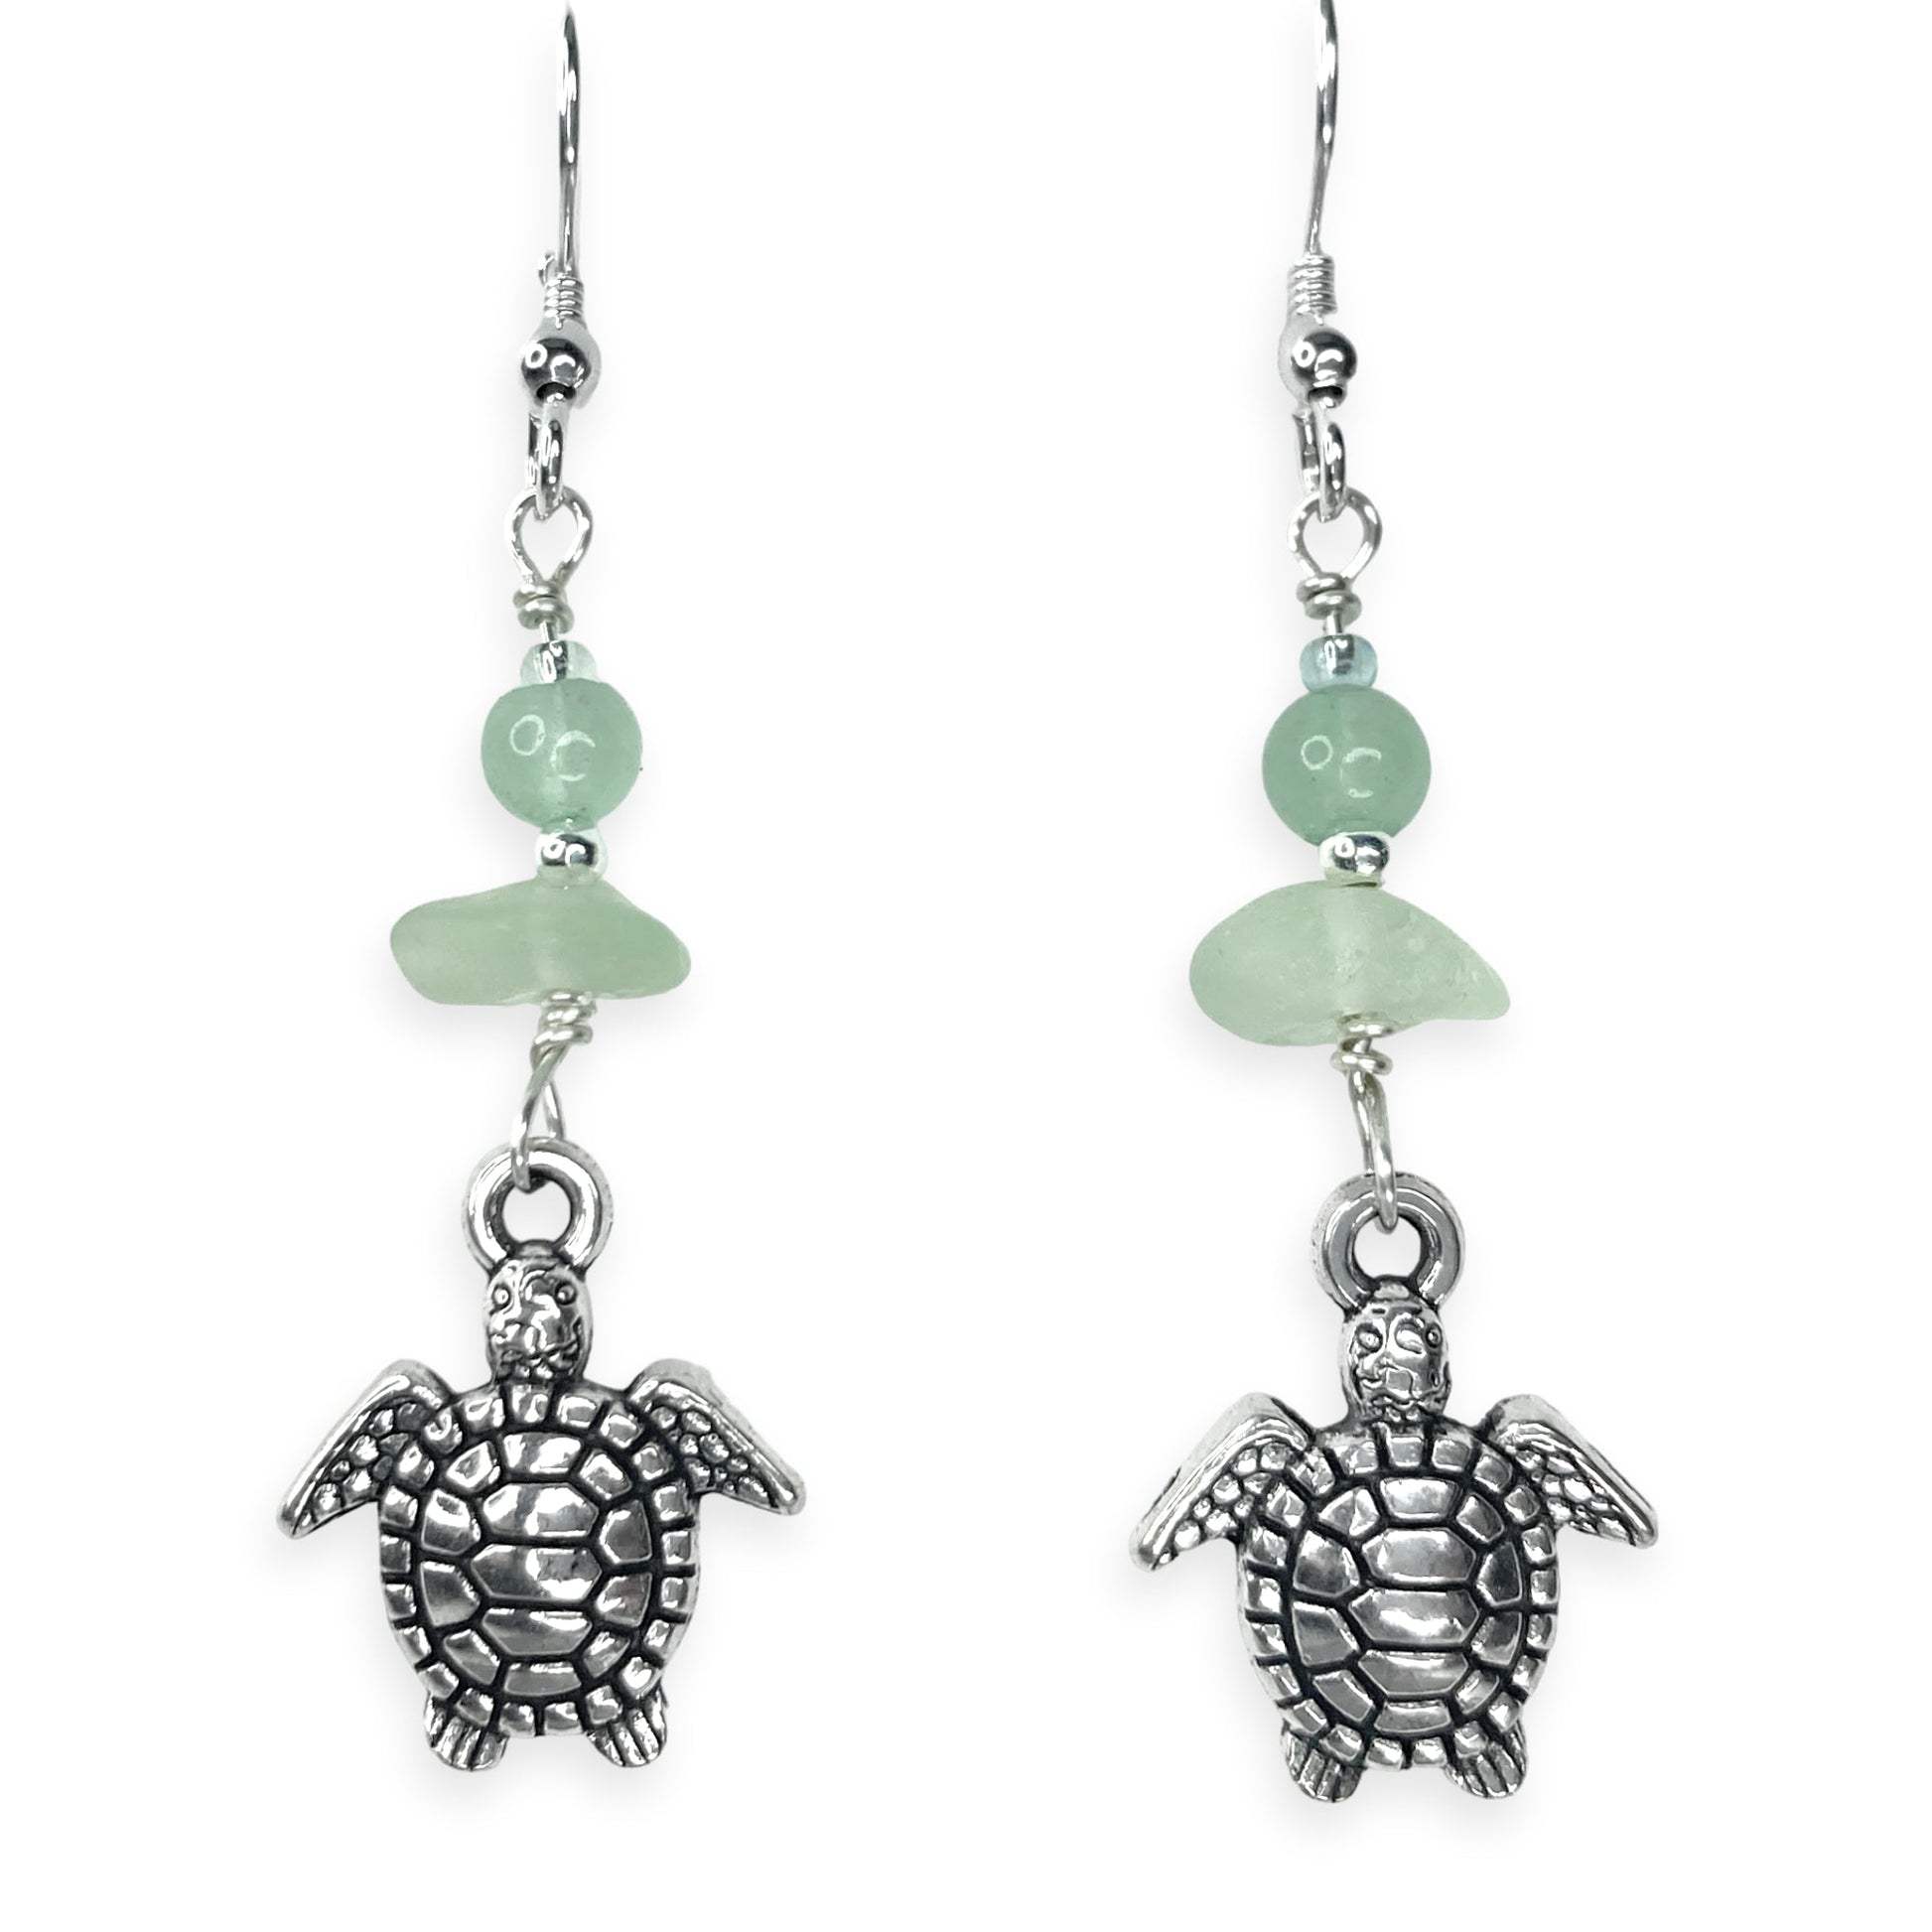 Turtle Earrings - Green Sea Glass & Silver Jewellery with Aventurine Crystal Beads - East Neuk Beach Crafts